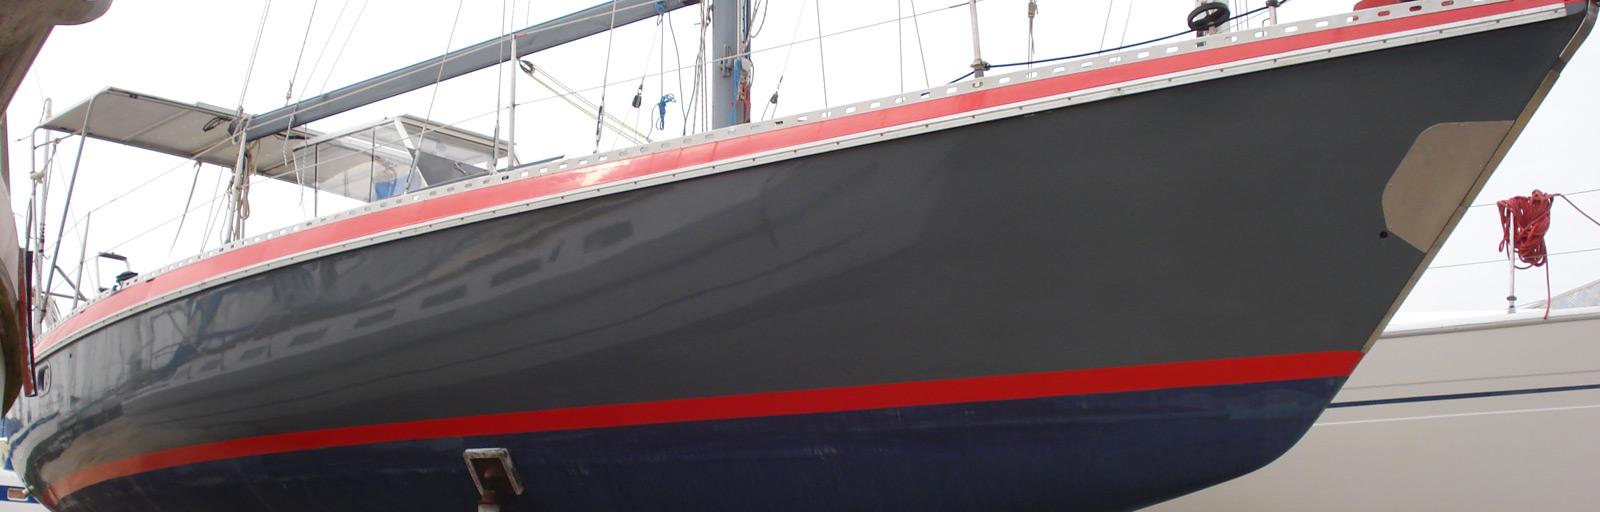 Gib Sea 105 - AYC Yachtbroker